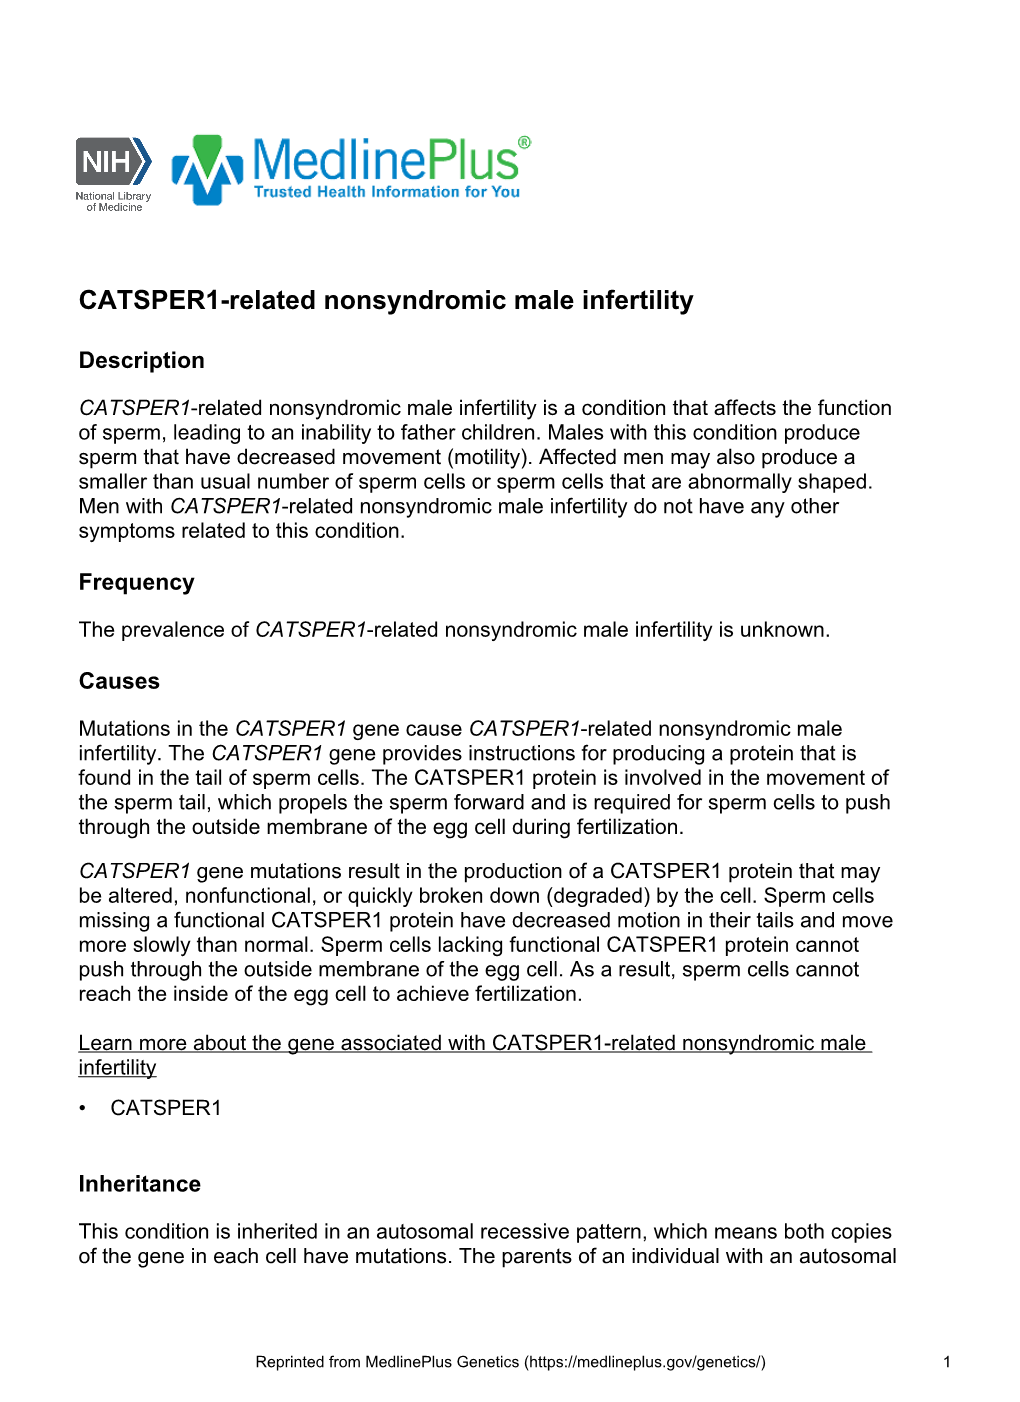 CATSPER1-Related Nonsyndromic Male Infertility